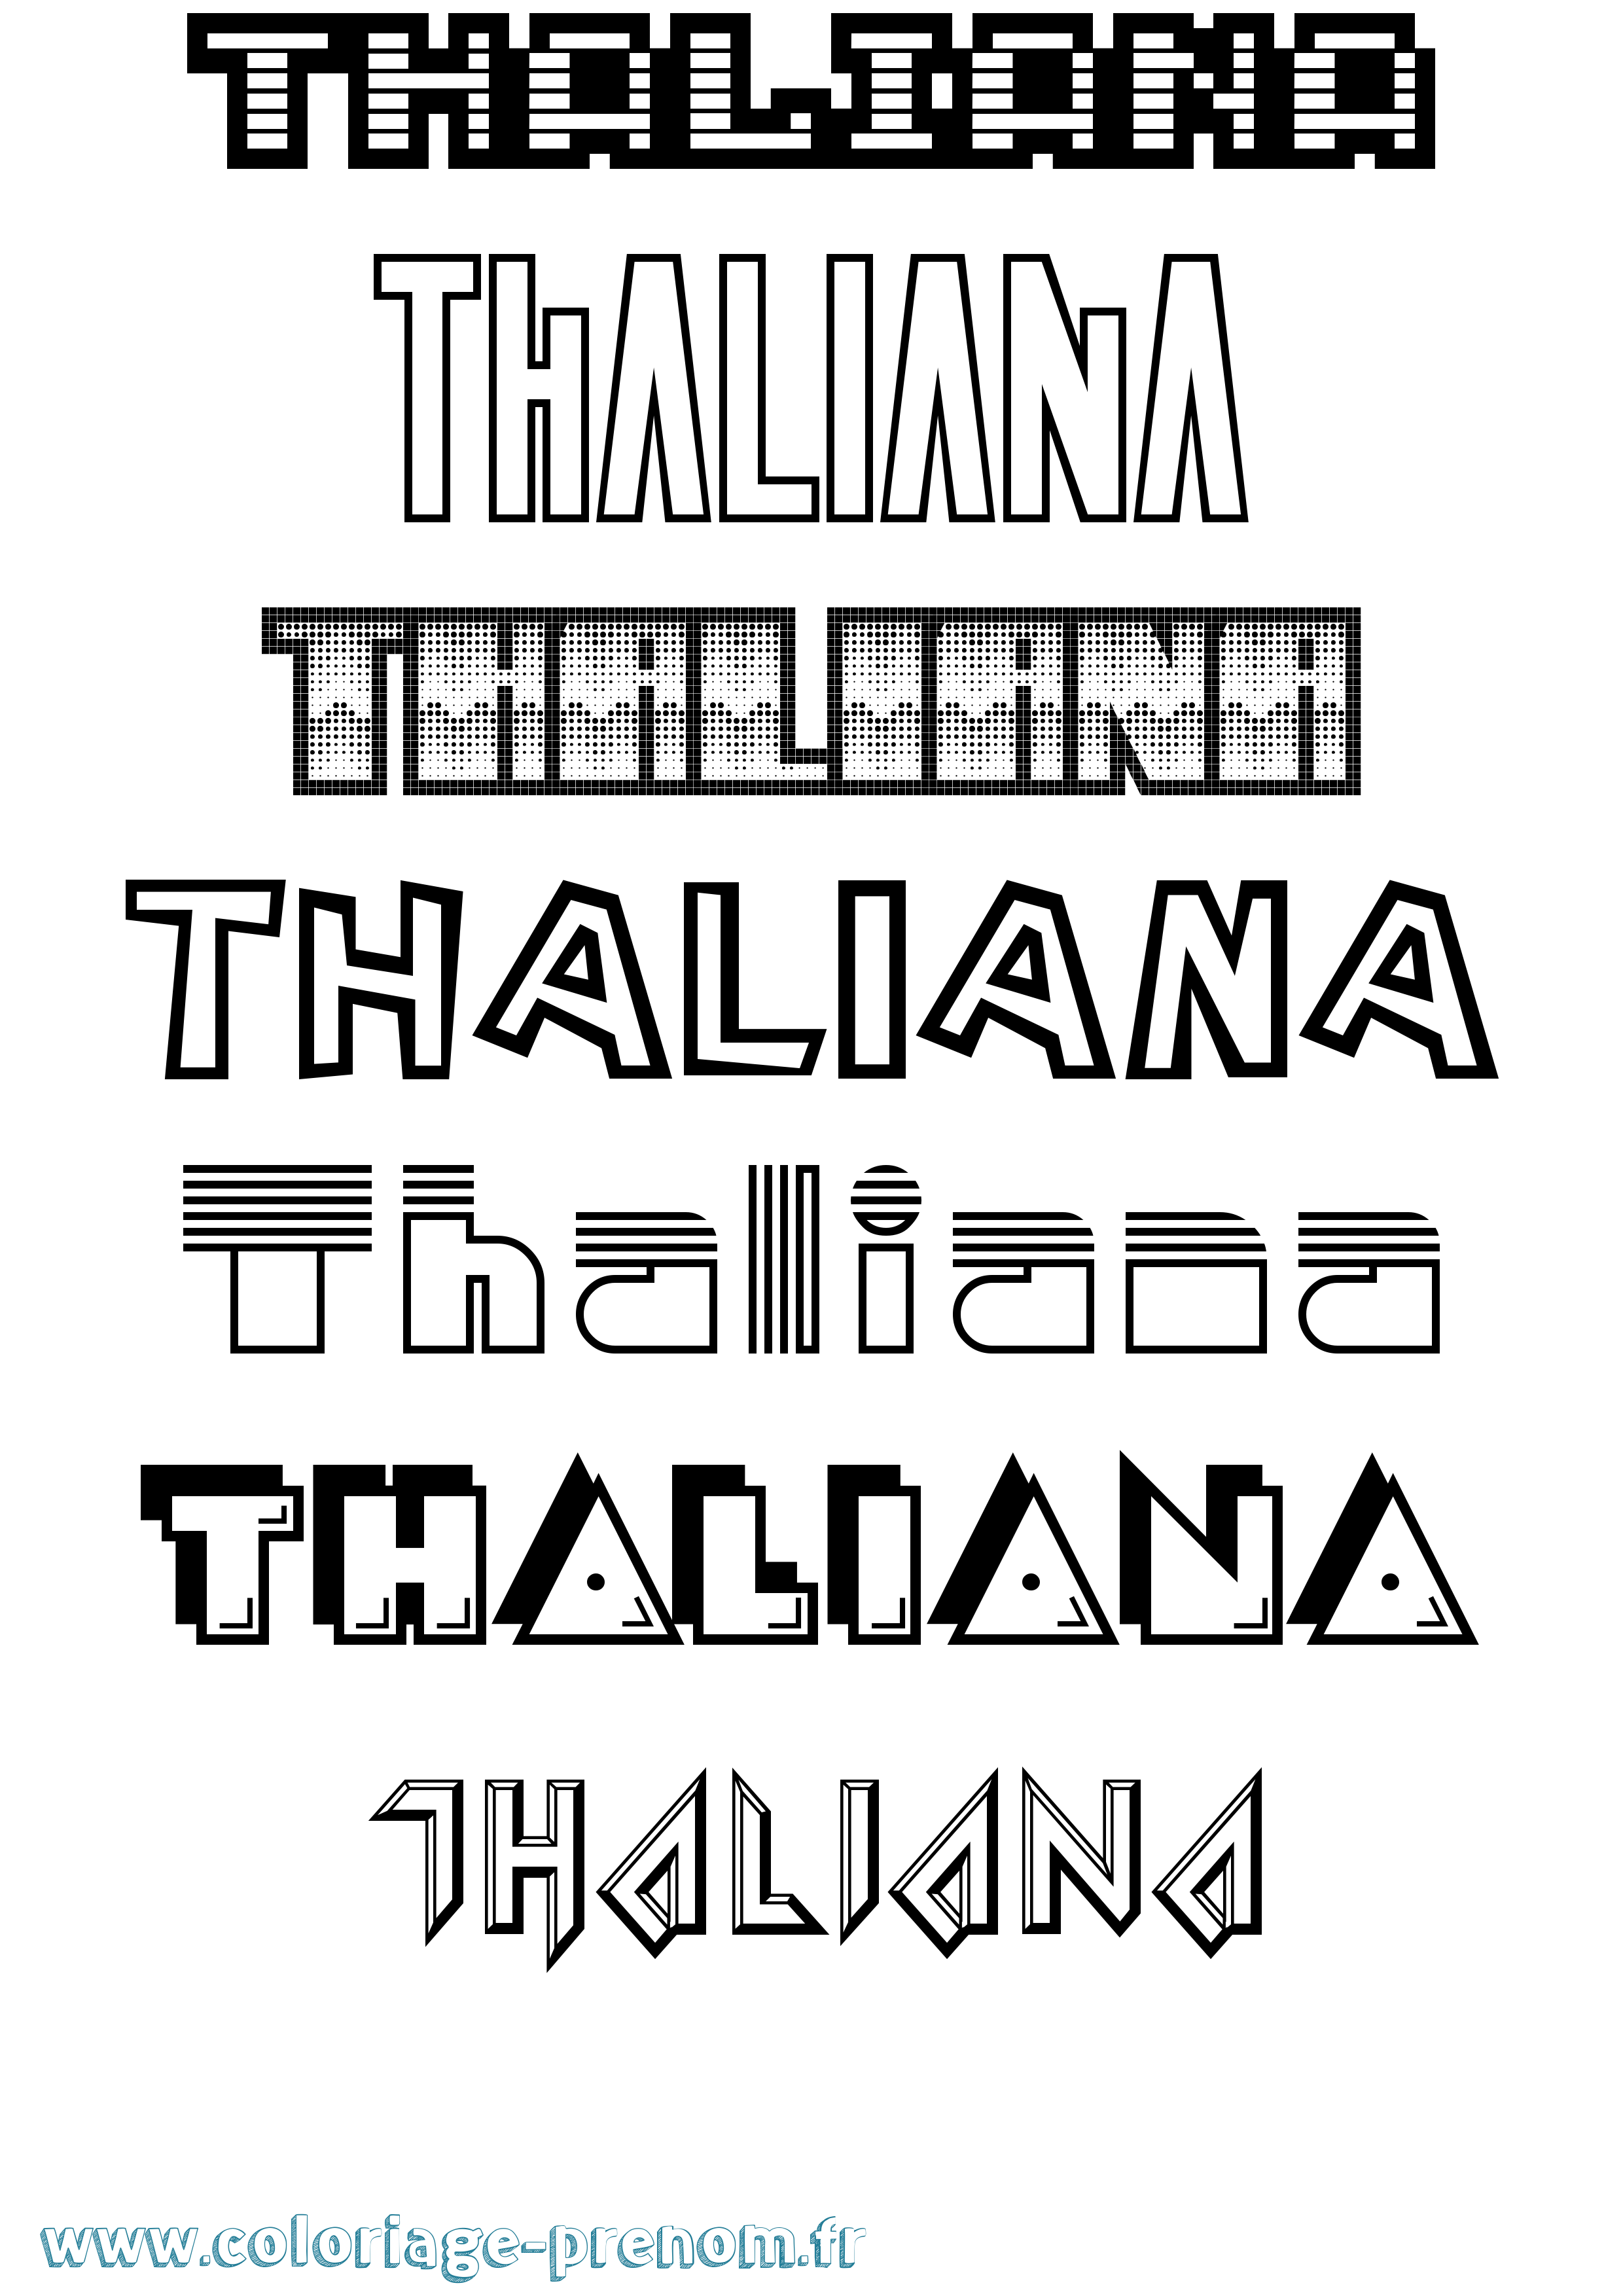 Coloriage prénom Thaliana Jeux Vidéos